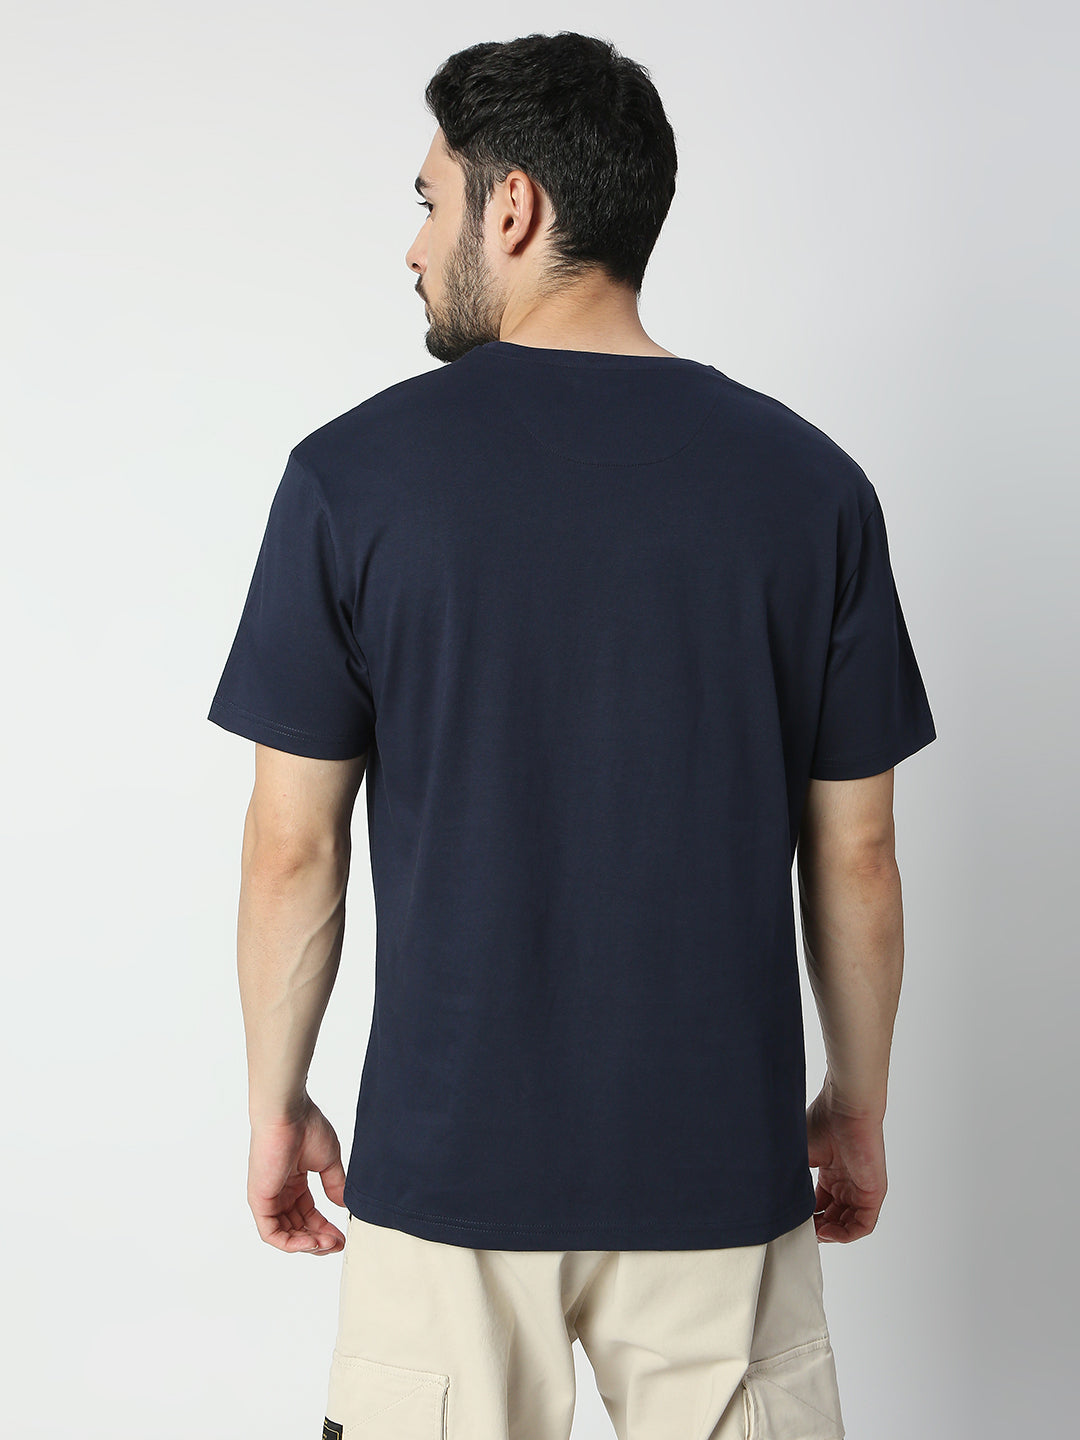 Buy Blamblack Solid Navy Blue Half Sleeved T-shirt